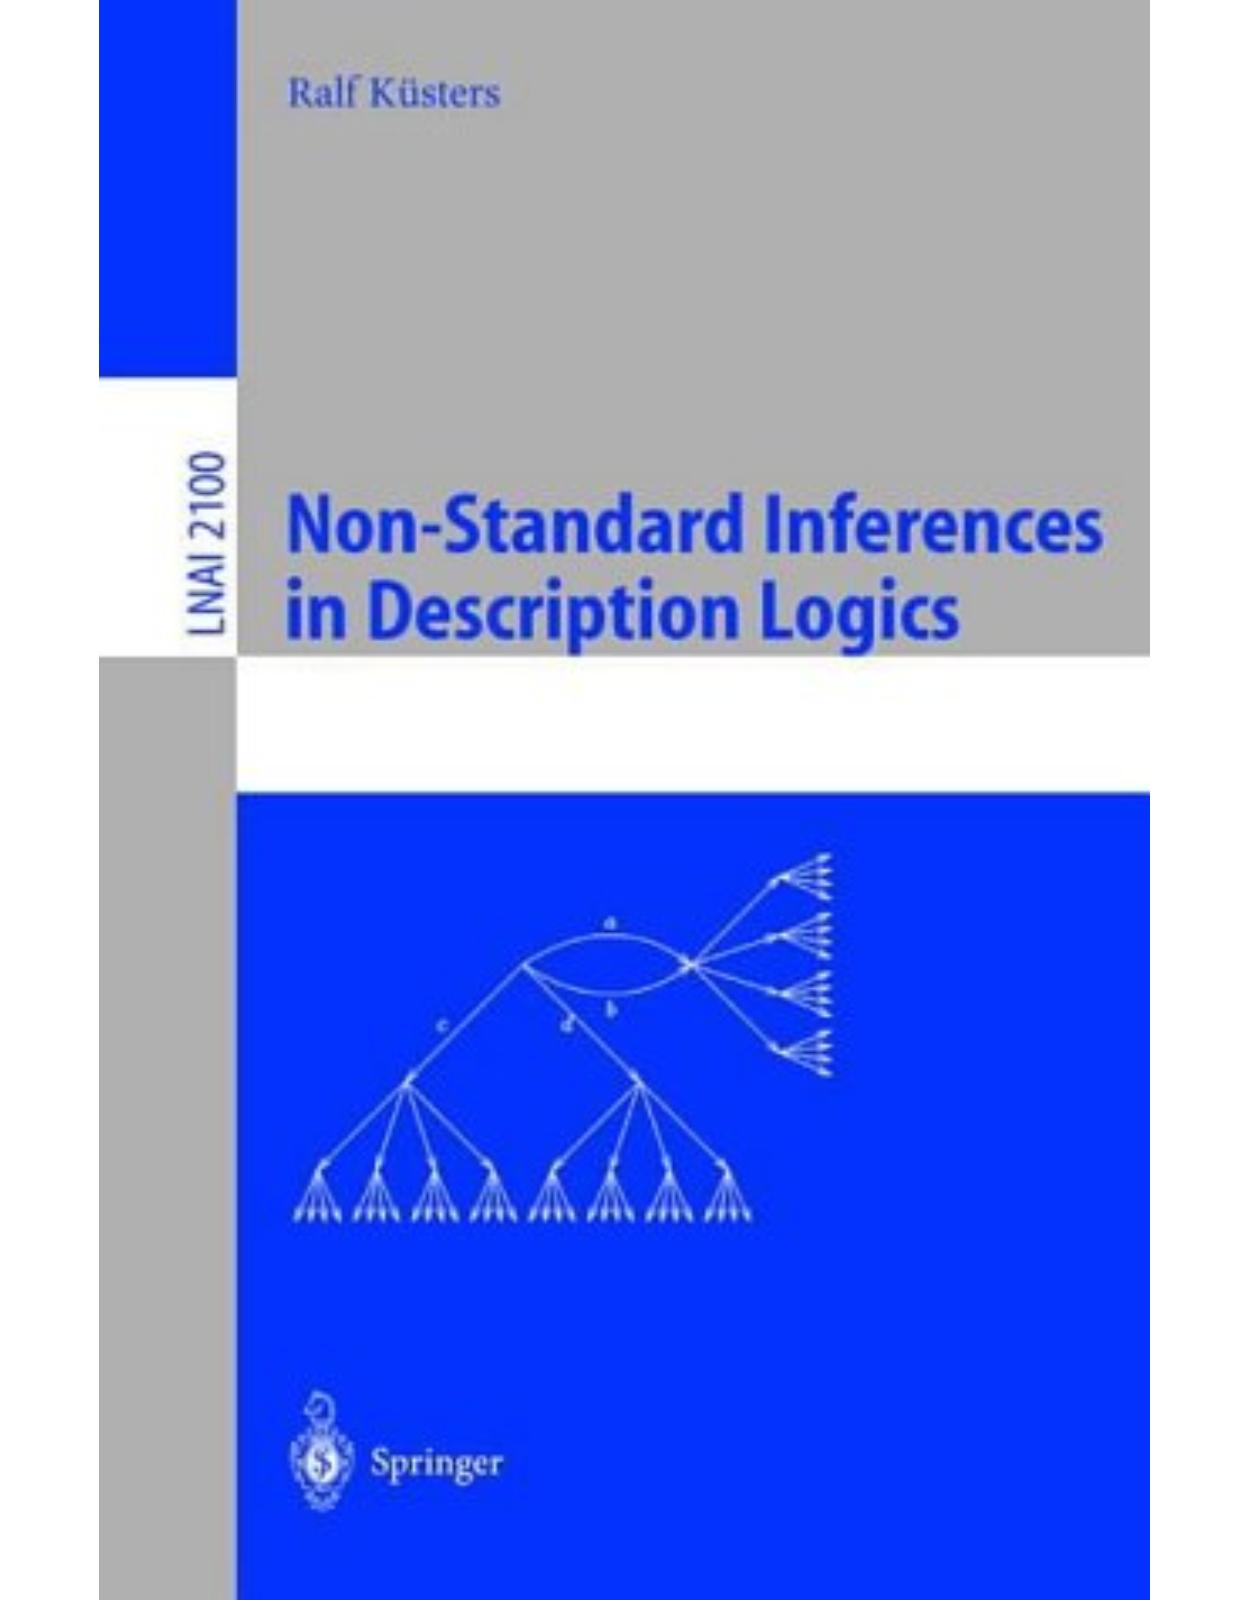 Non-standard Inferences in Description Logics